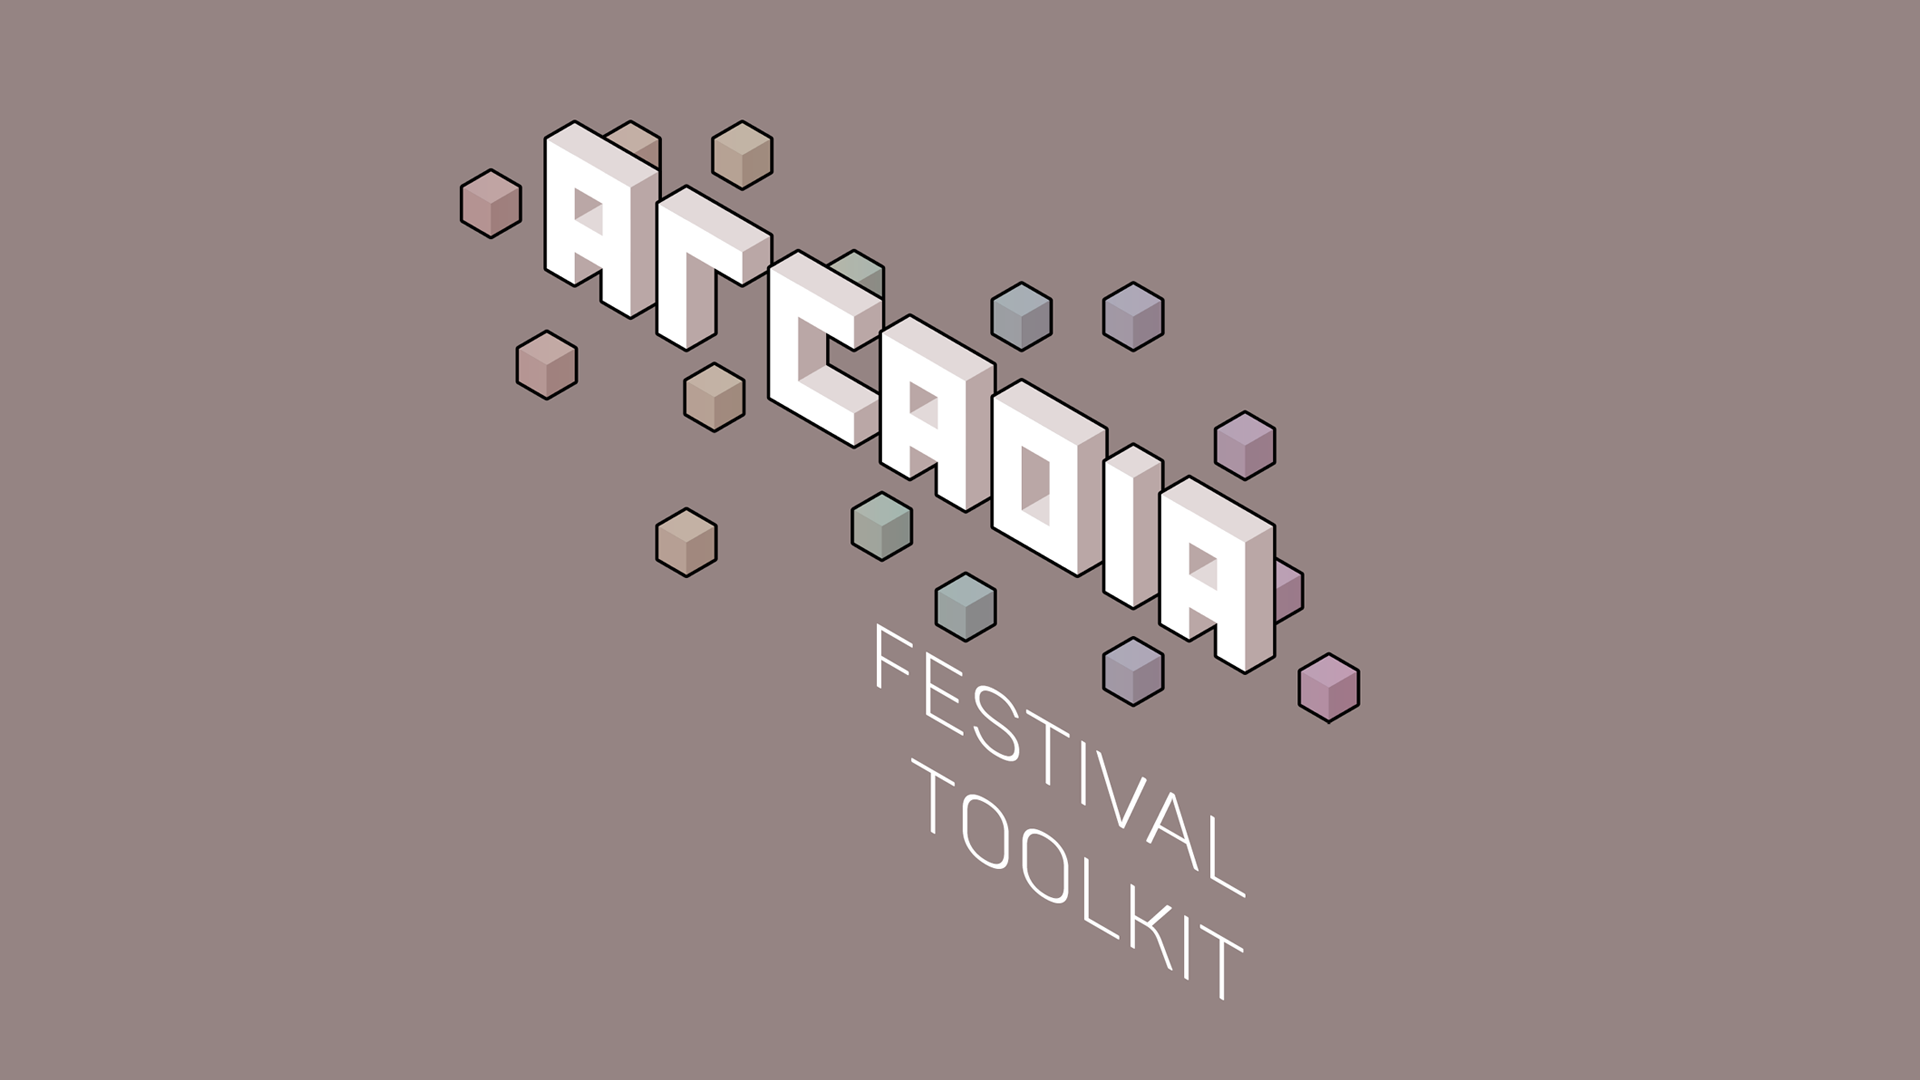 Arcadia Festival Toolkit